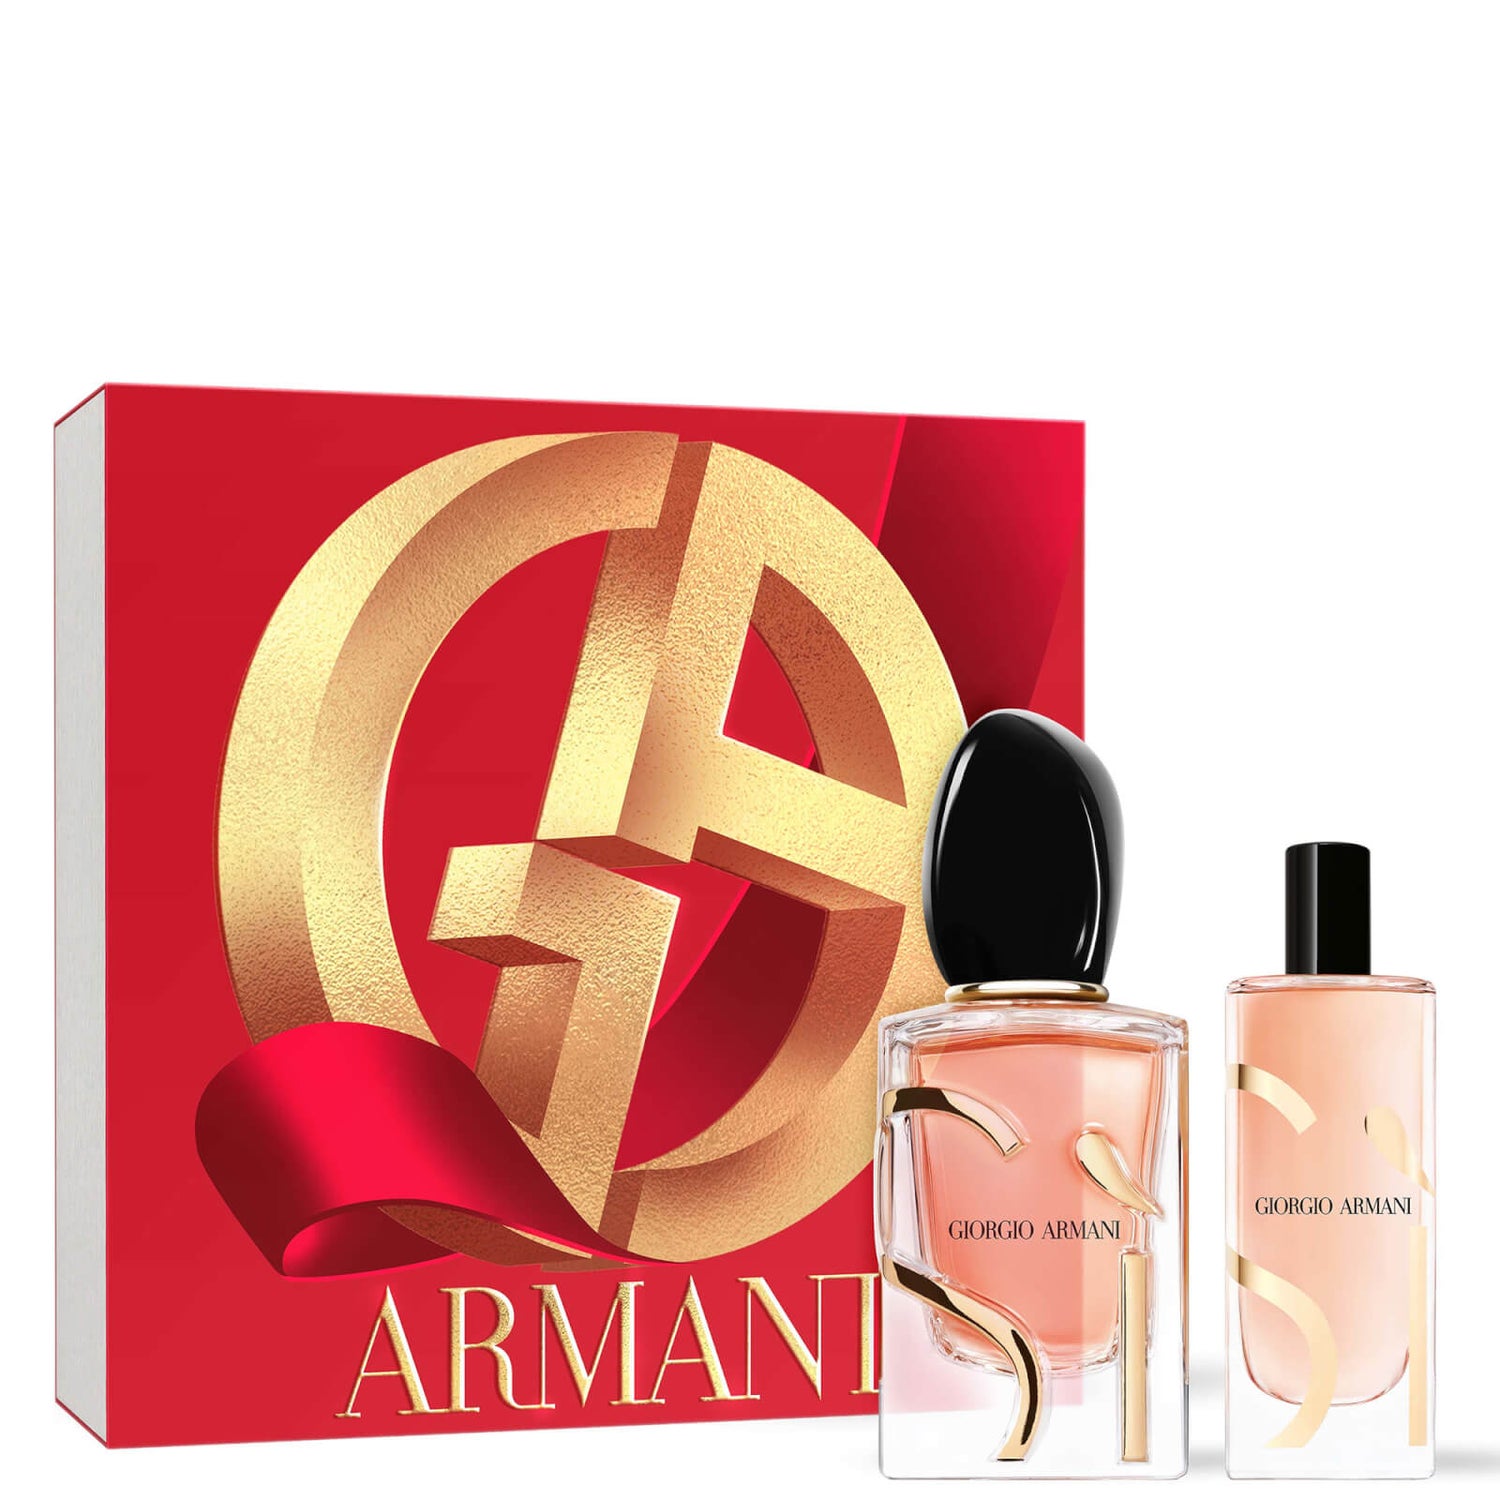 Armani Si Eau de Parfum Intense 50ml and Si Eau de Parfum Intense 15ml Set (Worth £126.10)